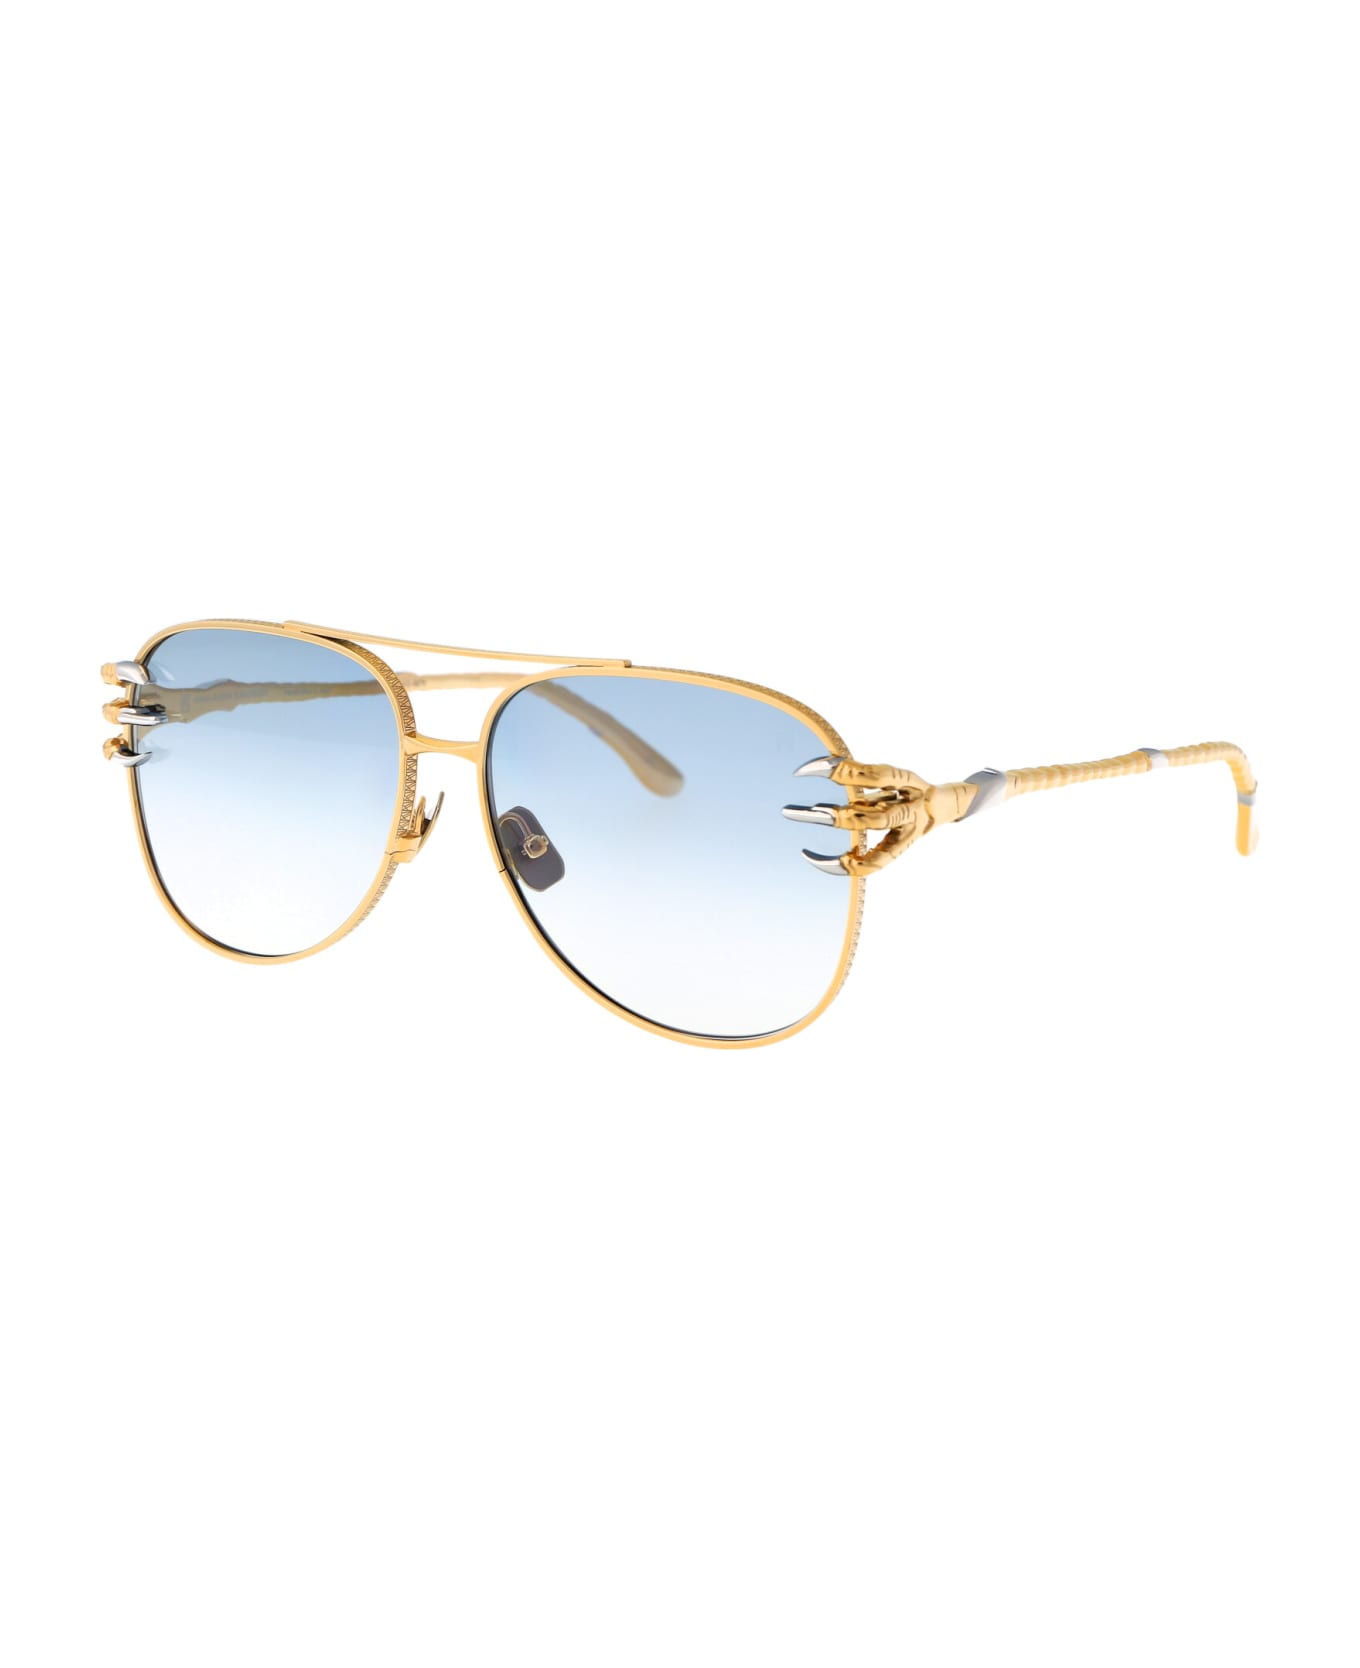 Anna-Karin Karlsson Claw Voyage Sunglasses - Zenya Squared Spotted Havana Sunglasses